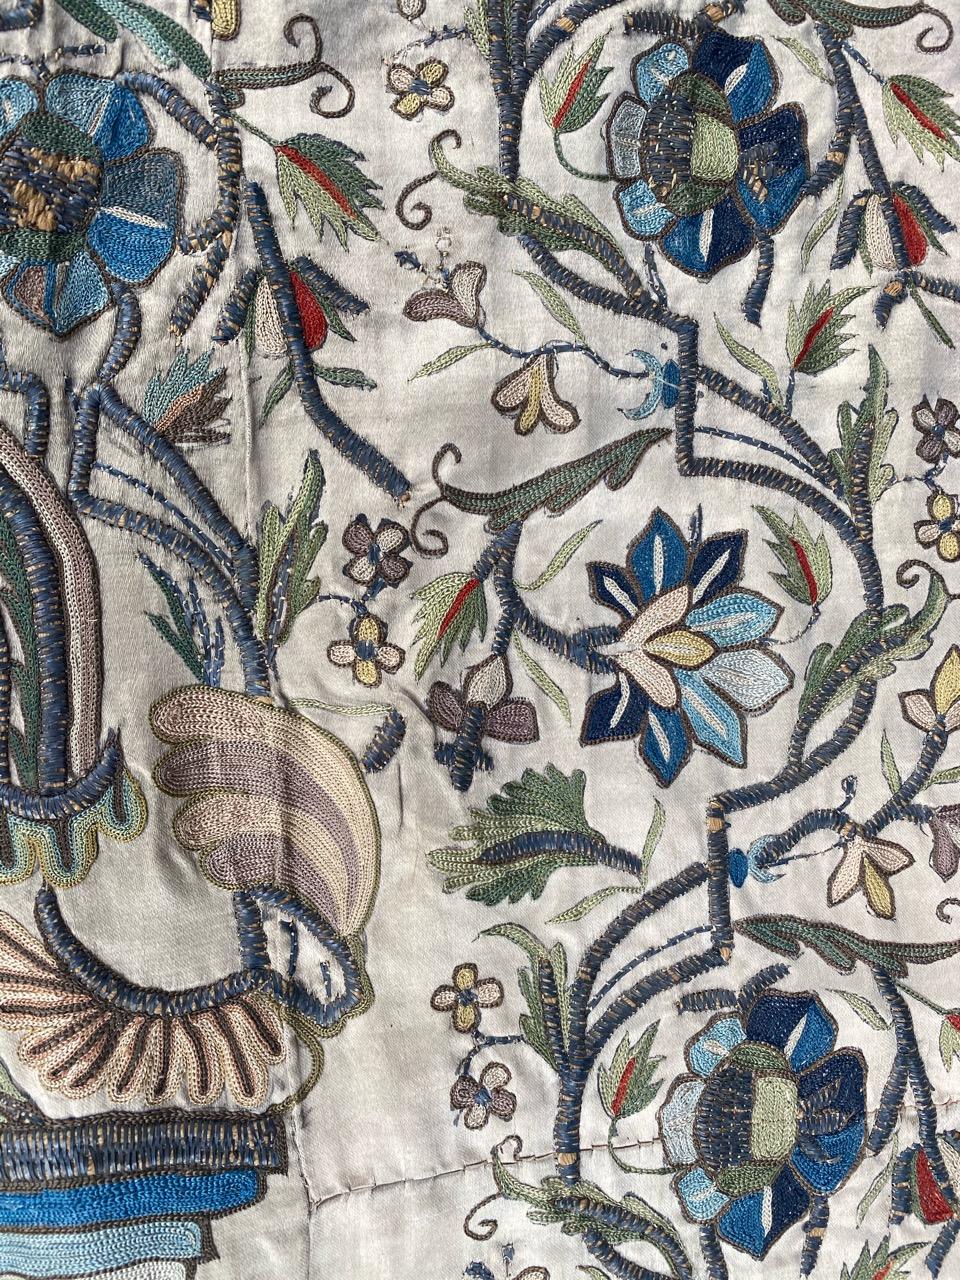 Bobyrug’s Wonderful Antique Turkish Ottoman Embroidery 4